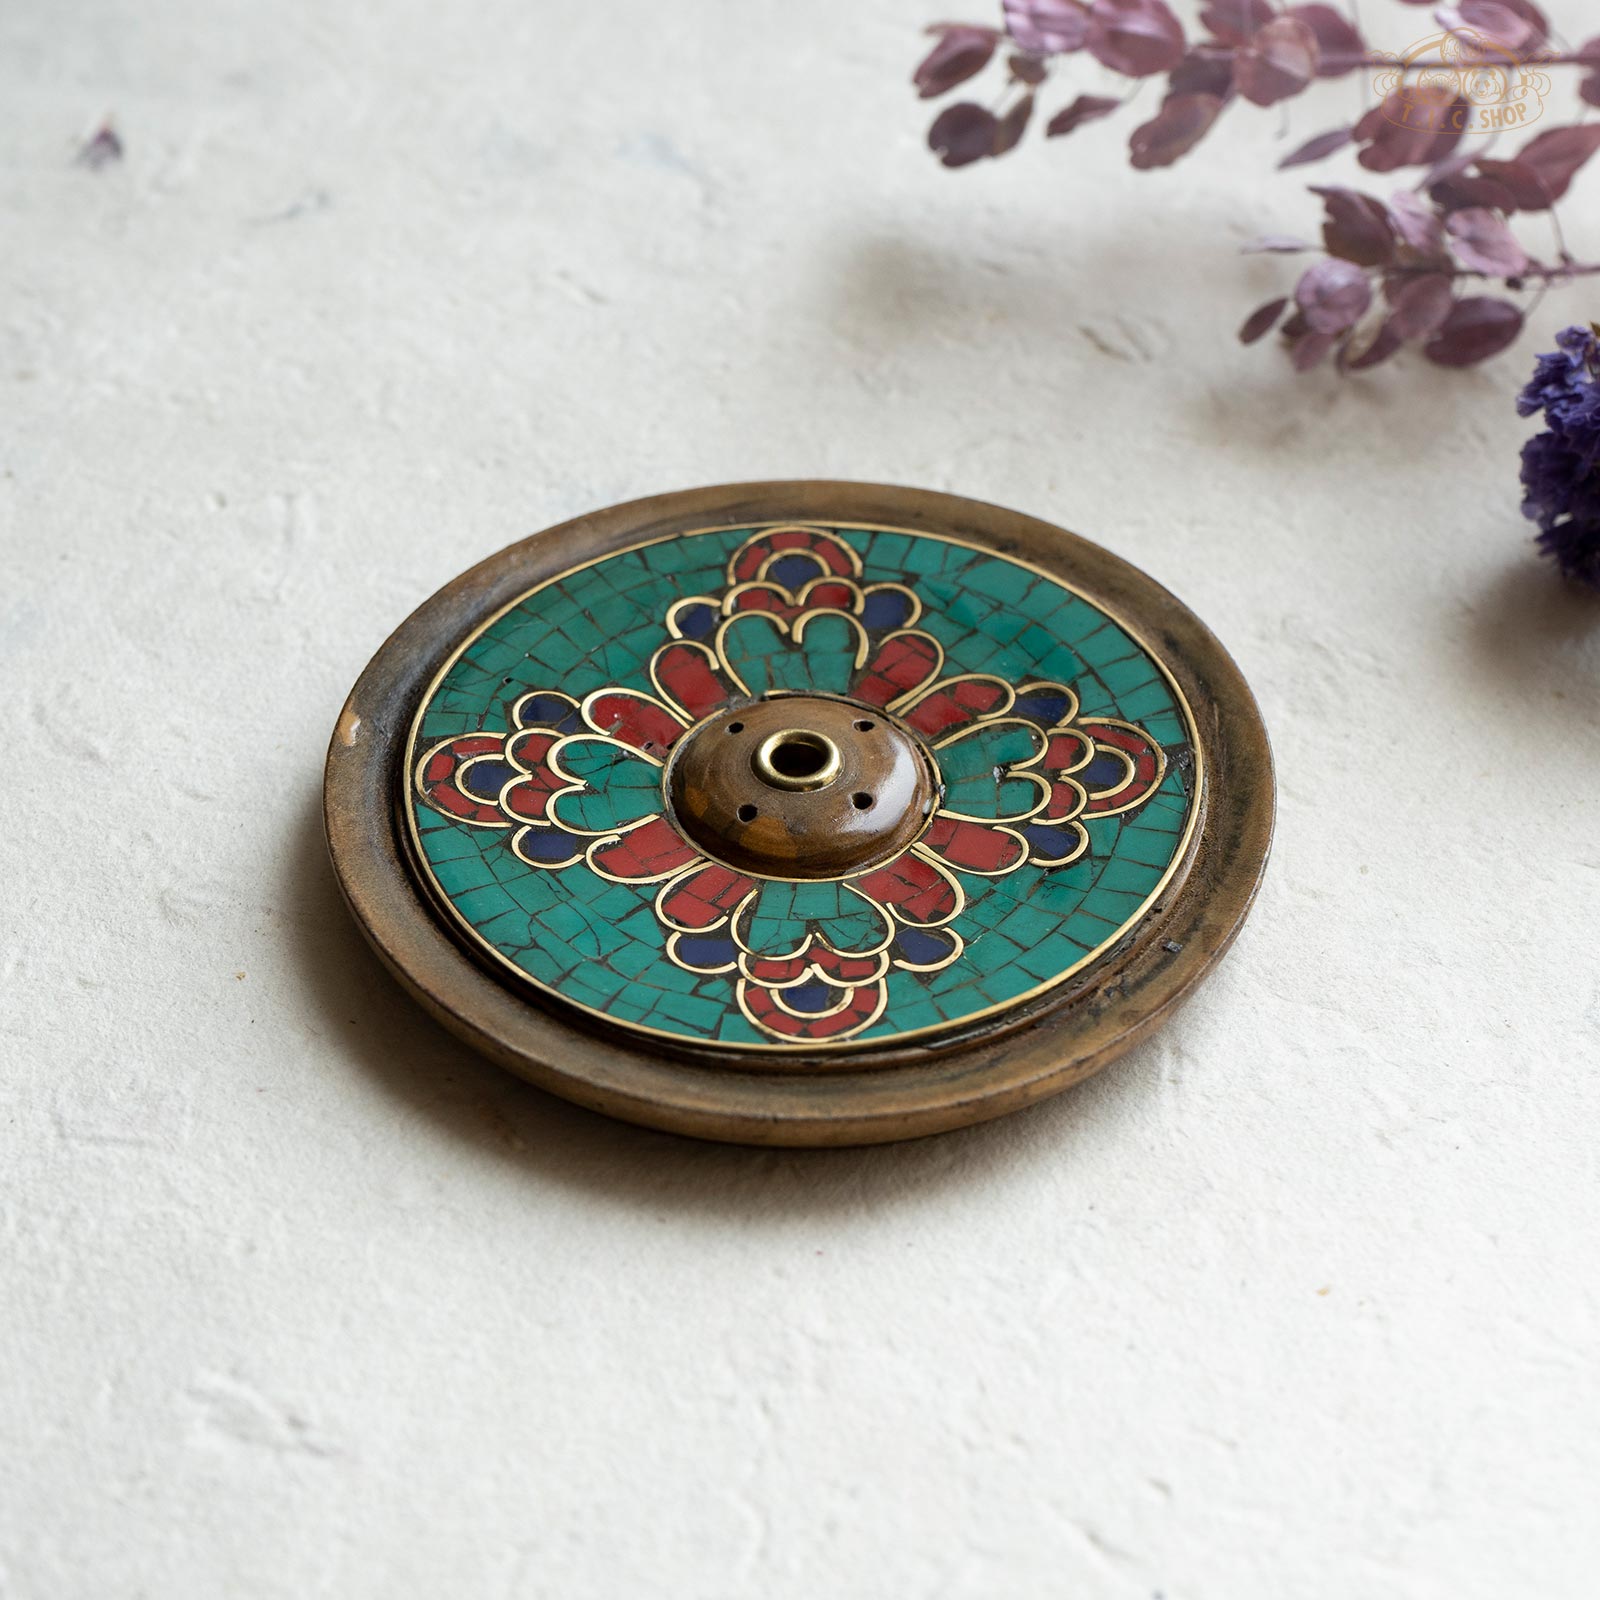 Mosaic Flower Wooden Incense Holder Plate